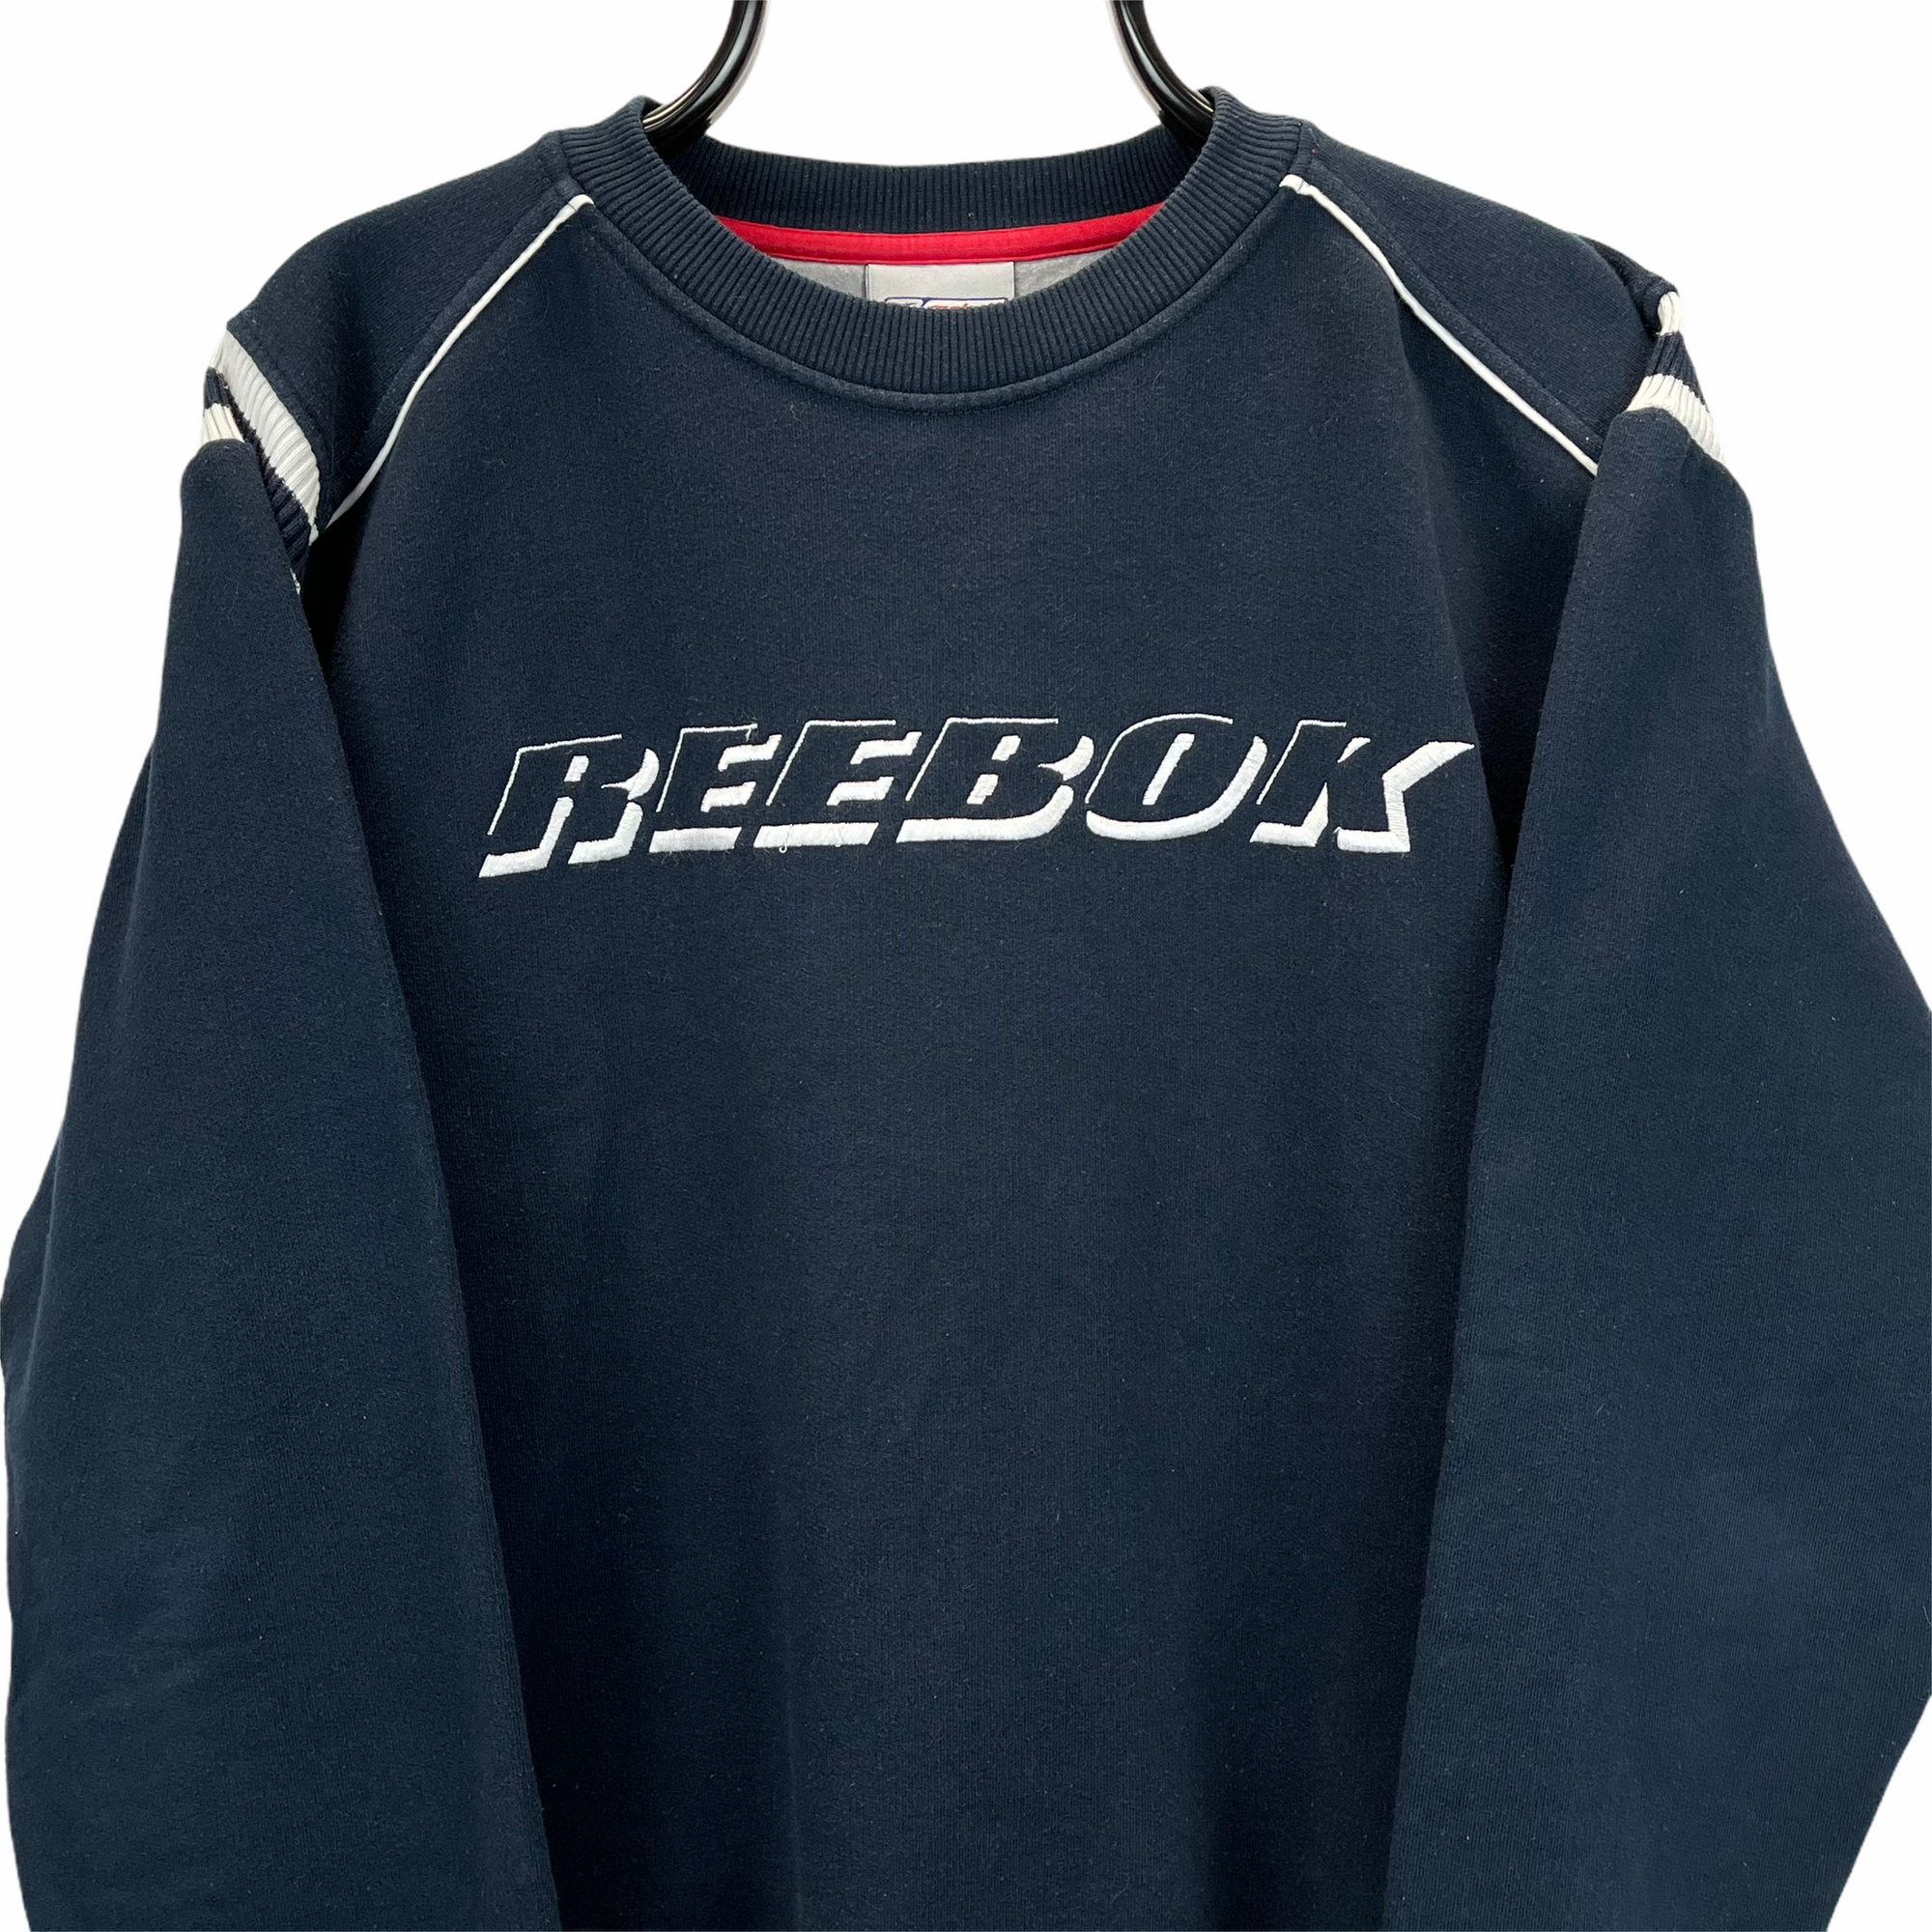 Vintage Reebok Spellout Sweatshirt in Black & White - Men's Large/Women's XL